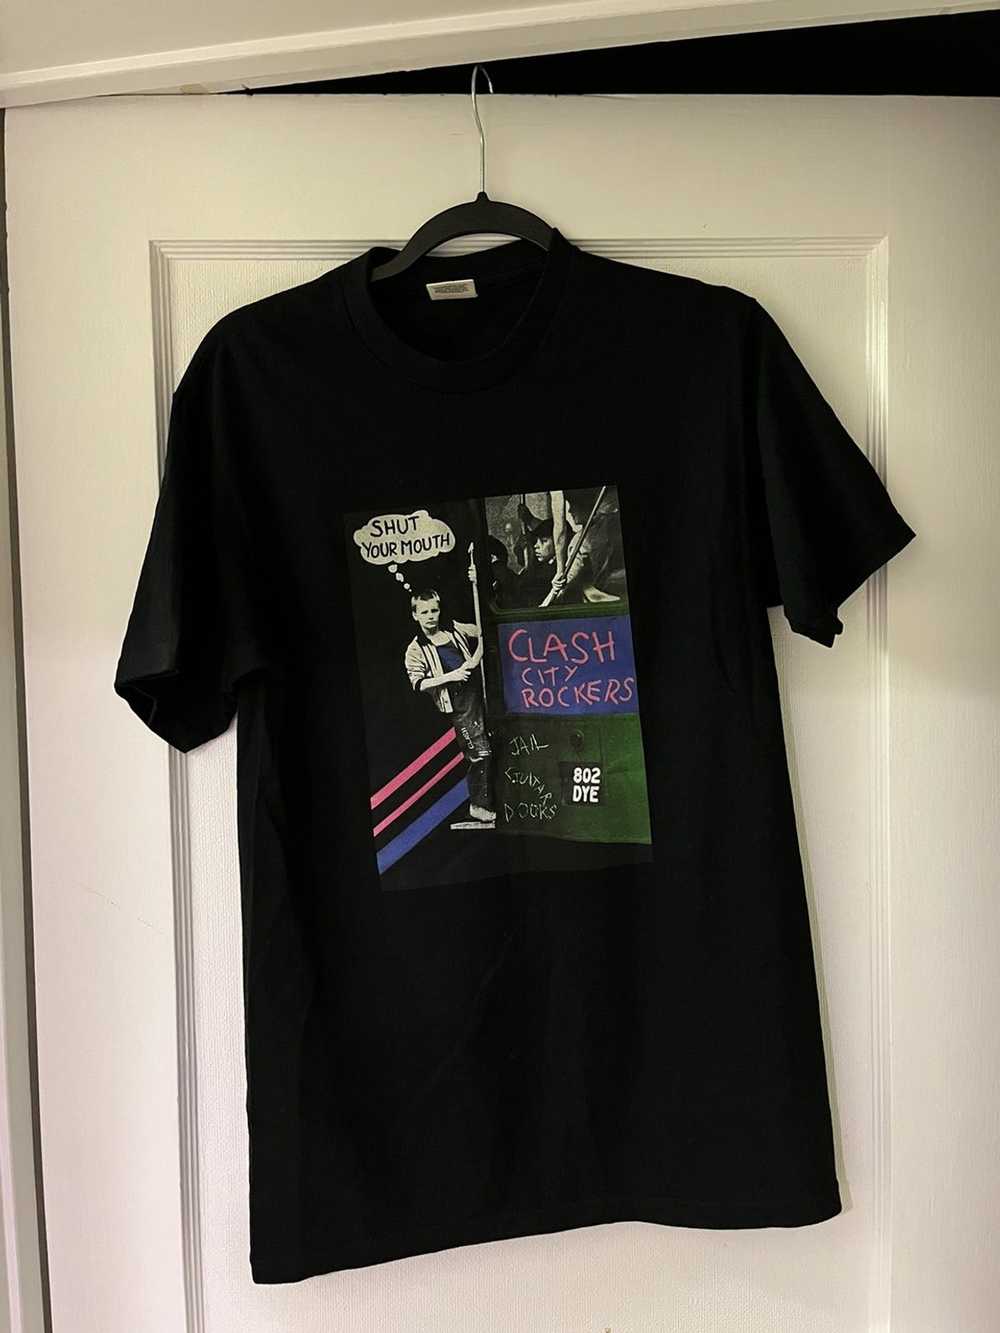 Supreme Supreme Clash city rockers T shirt - image 1